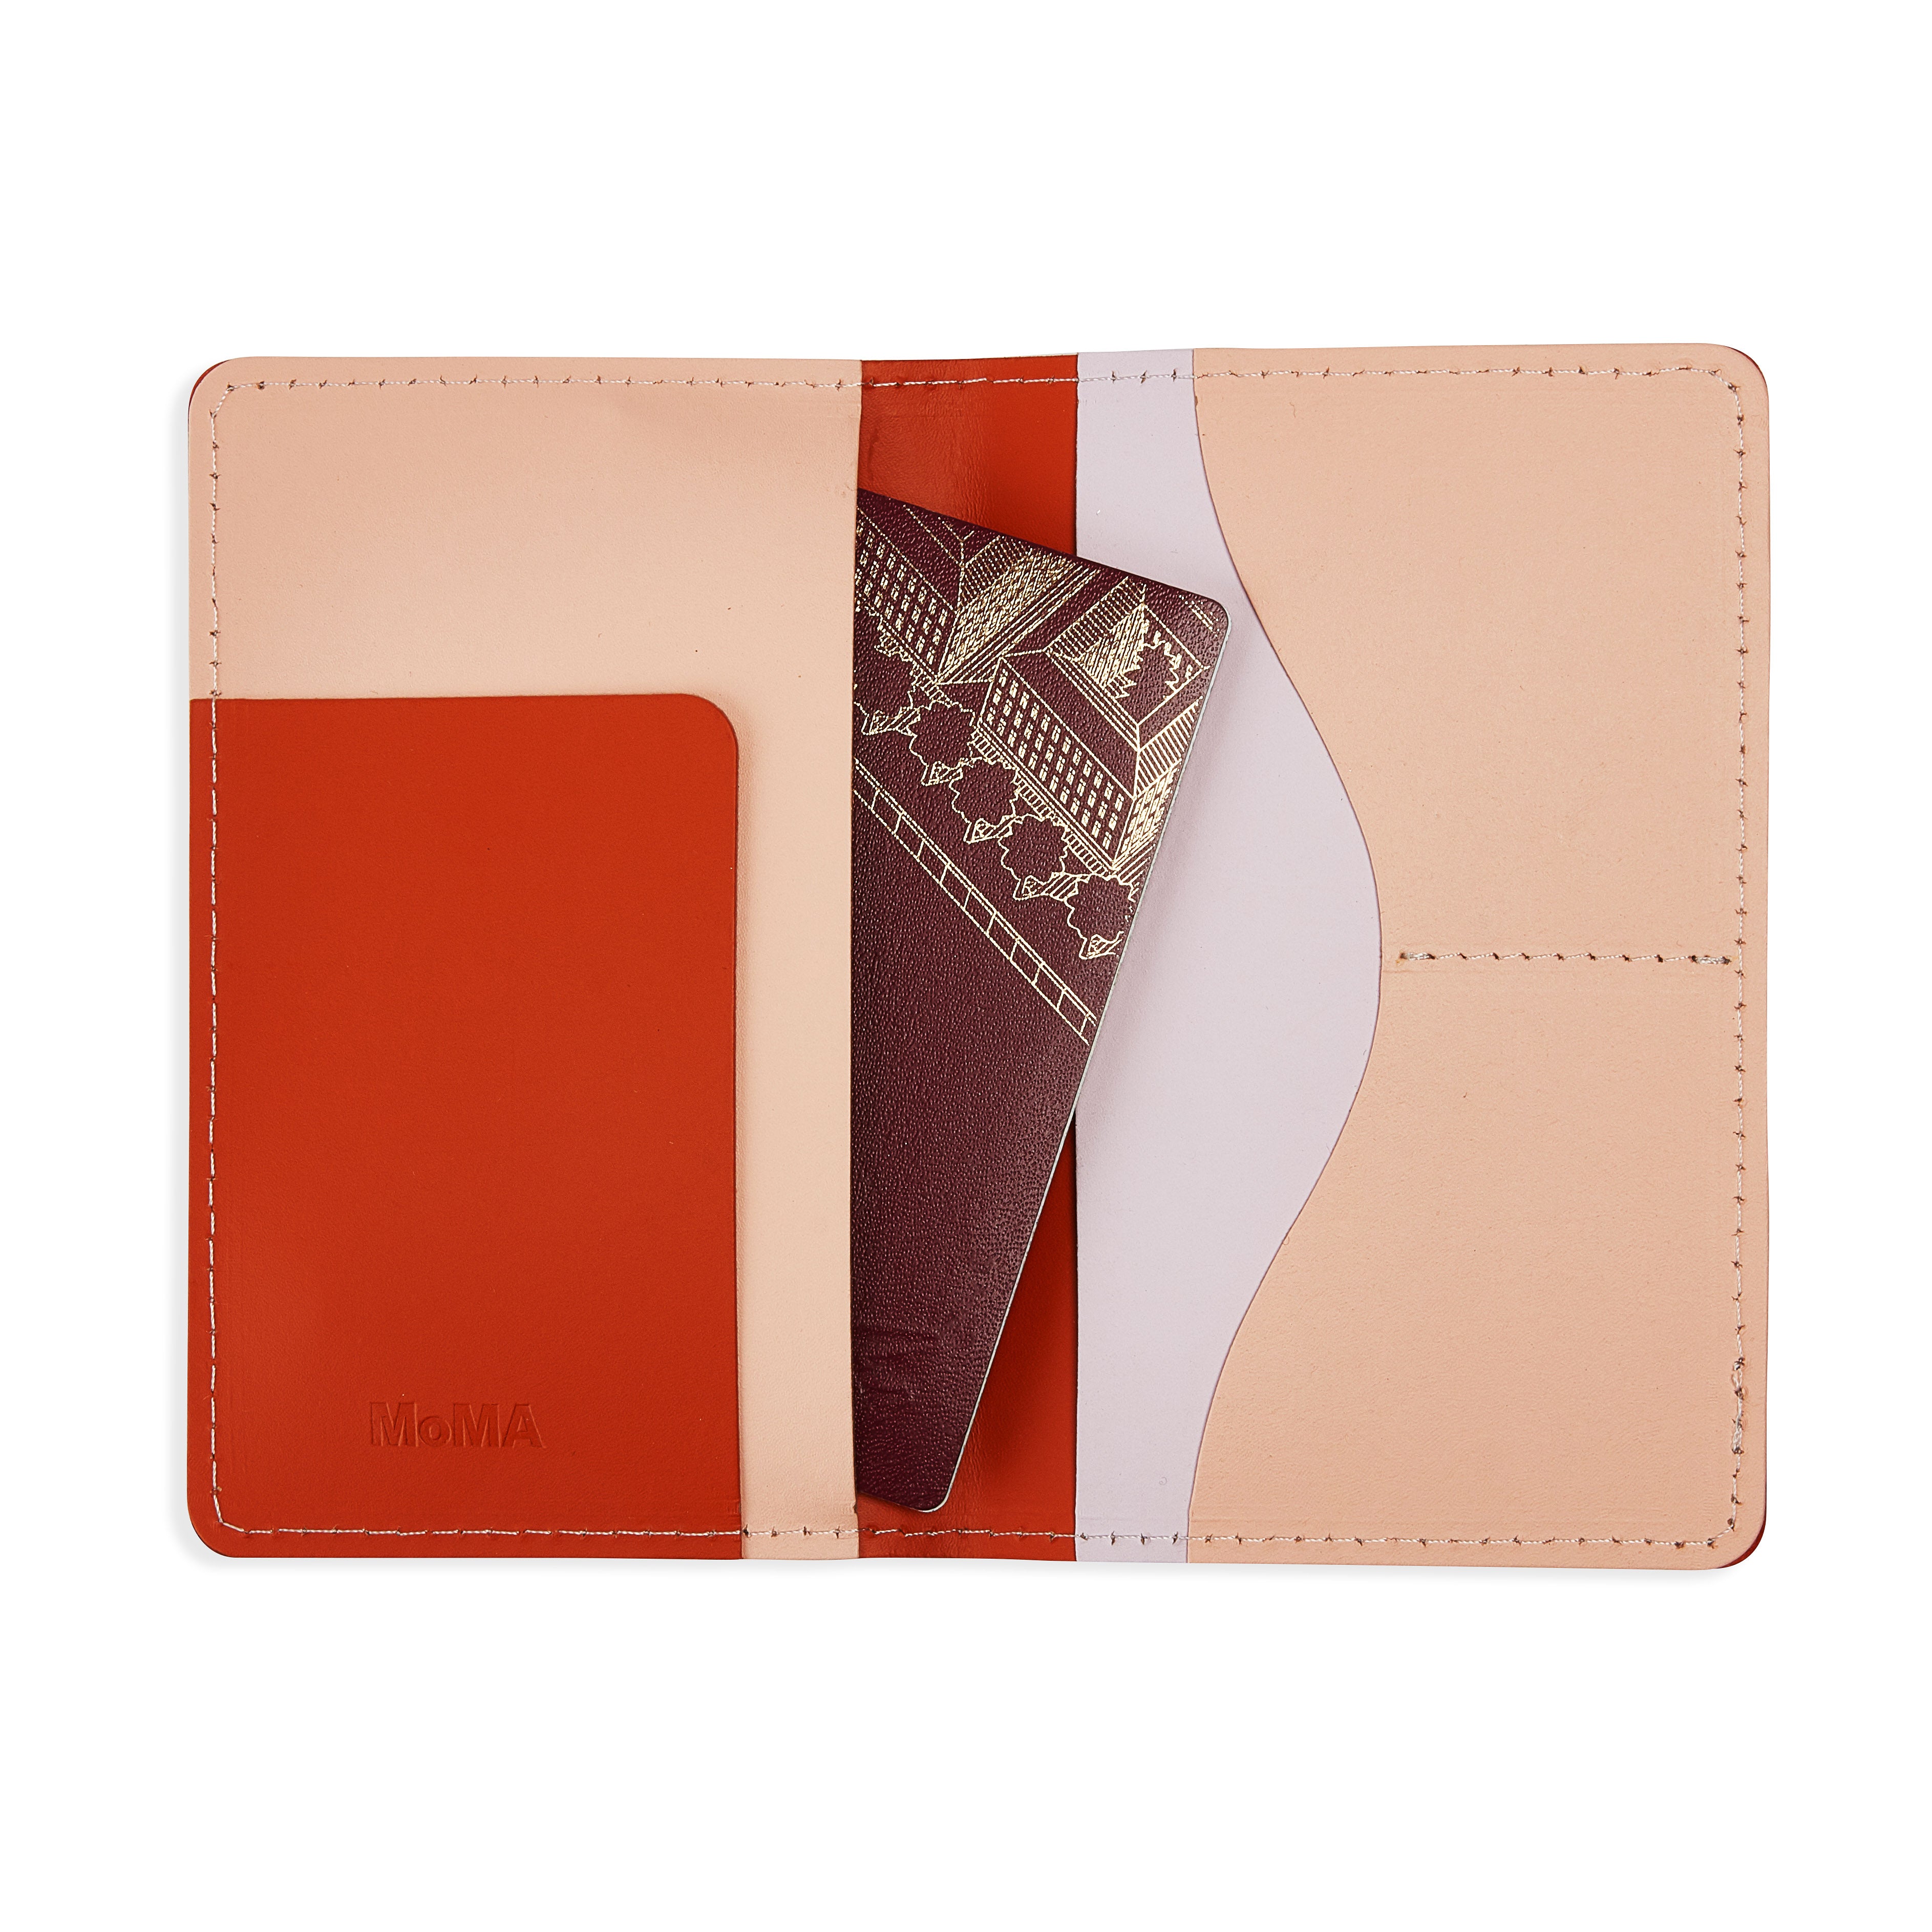 Custom Antic Leather Passport Cover, Zipped Bi-fold Passport